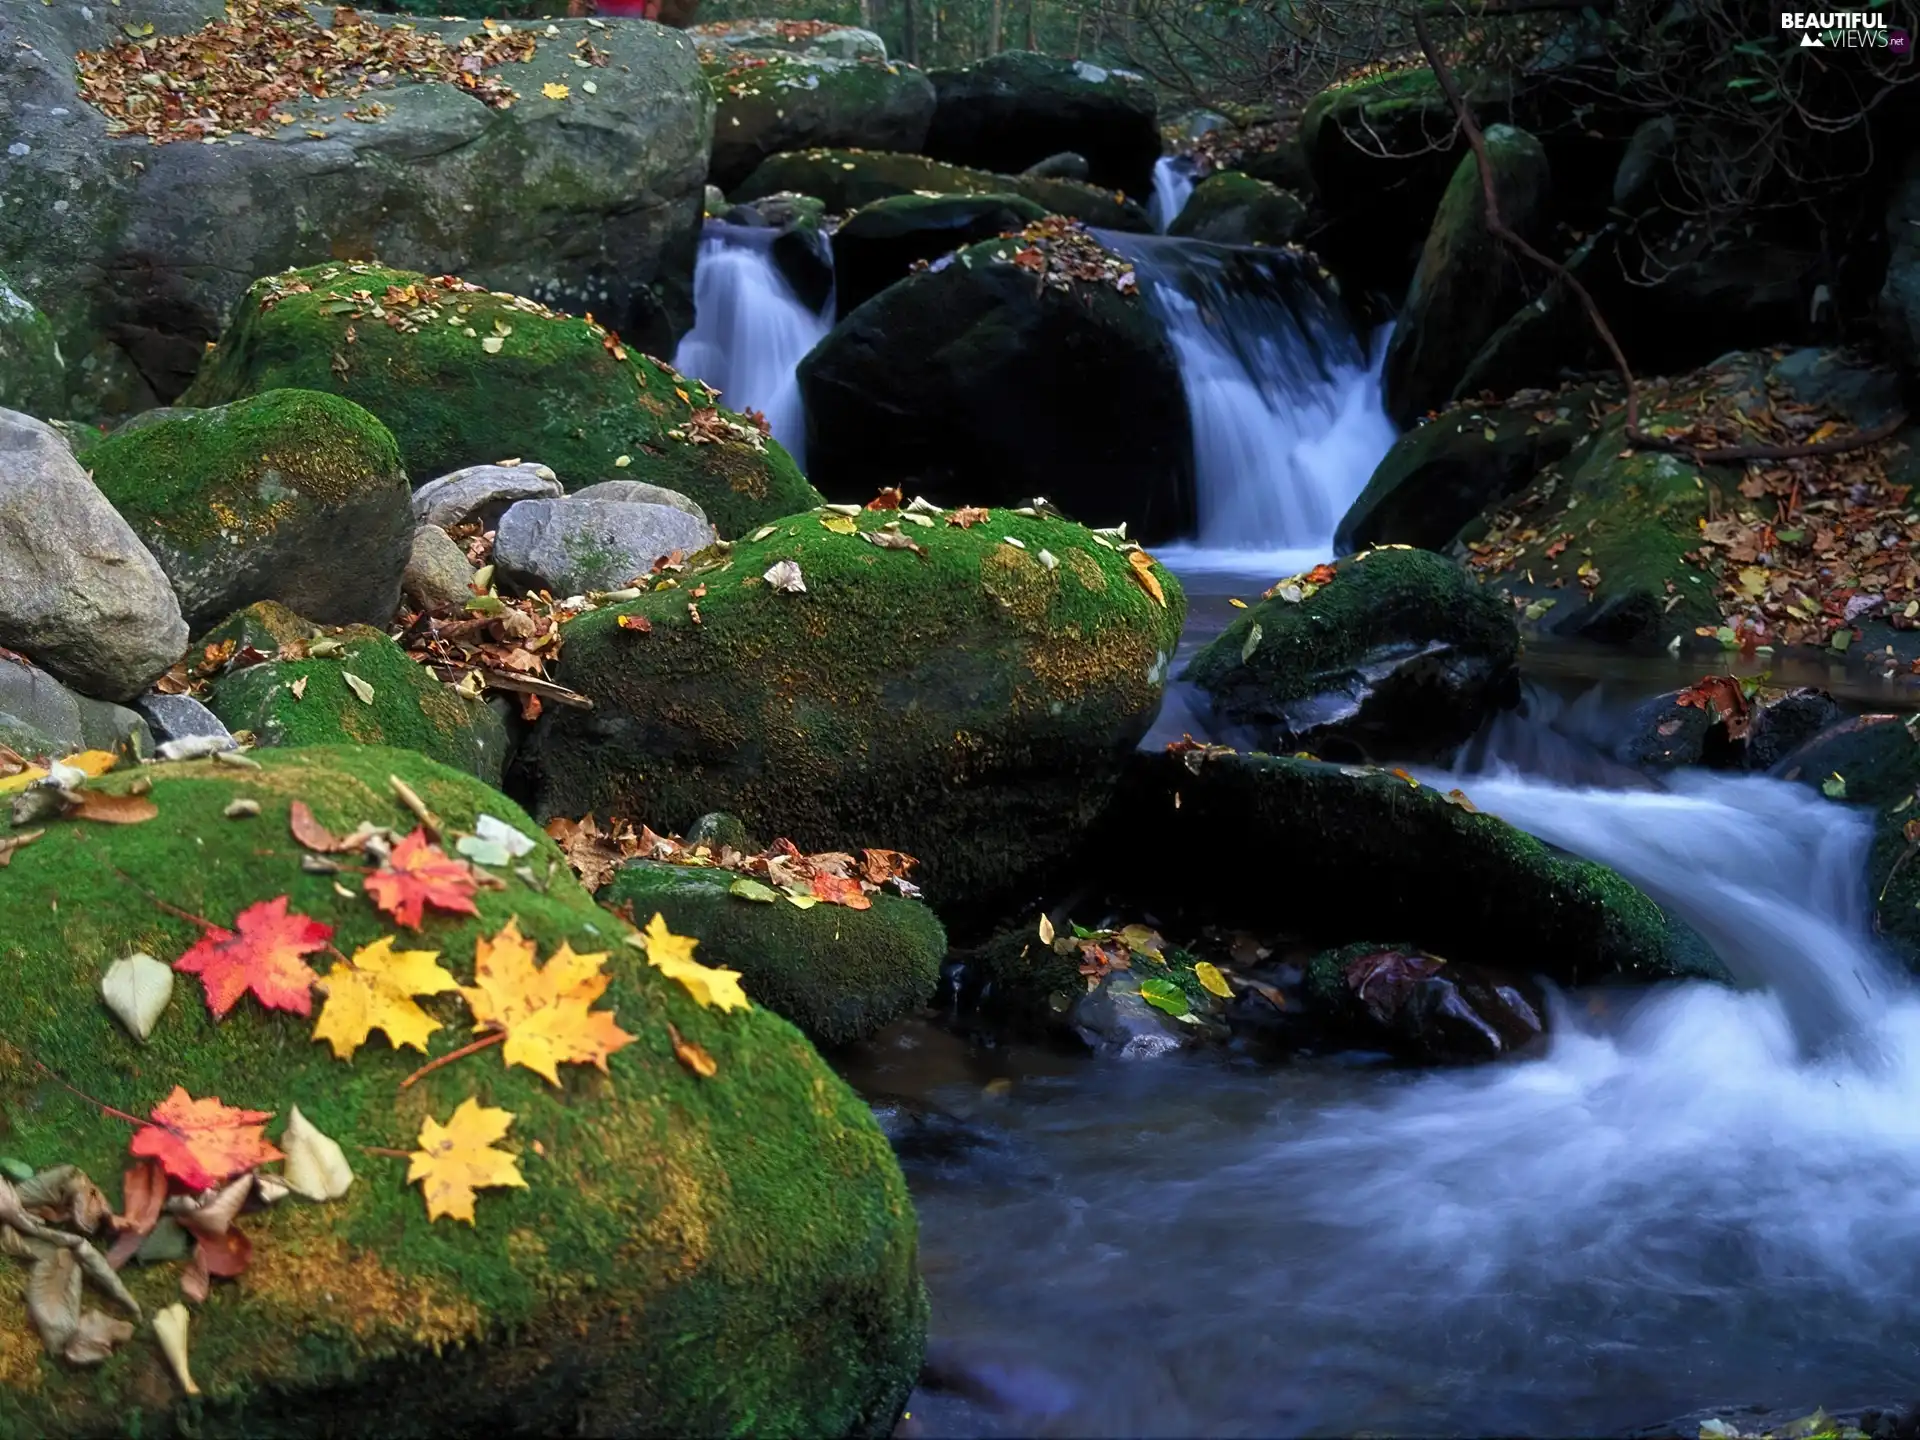 River, autumn, Leaf, Moss, Stones, Mountain